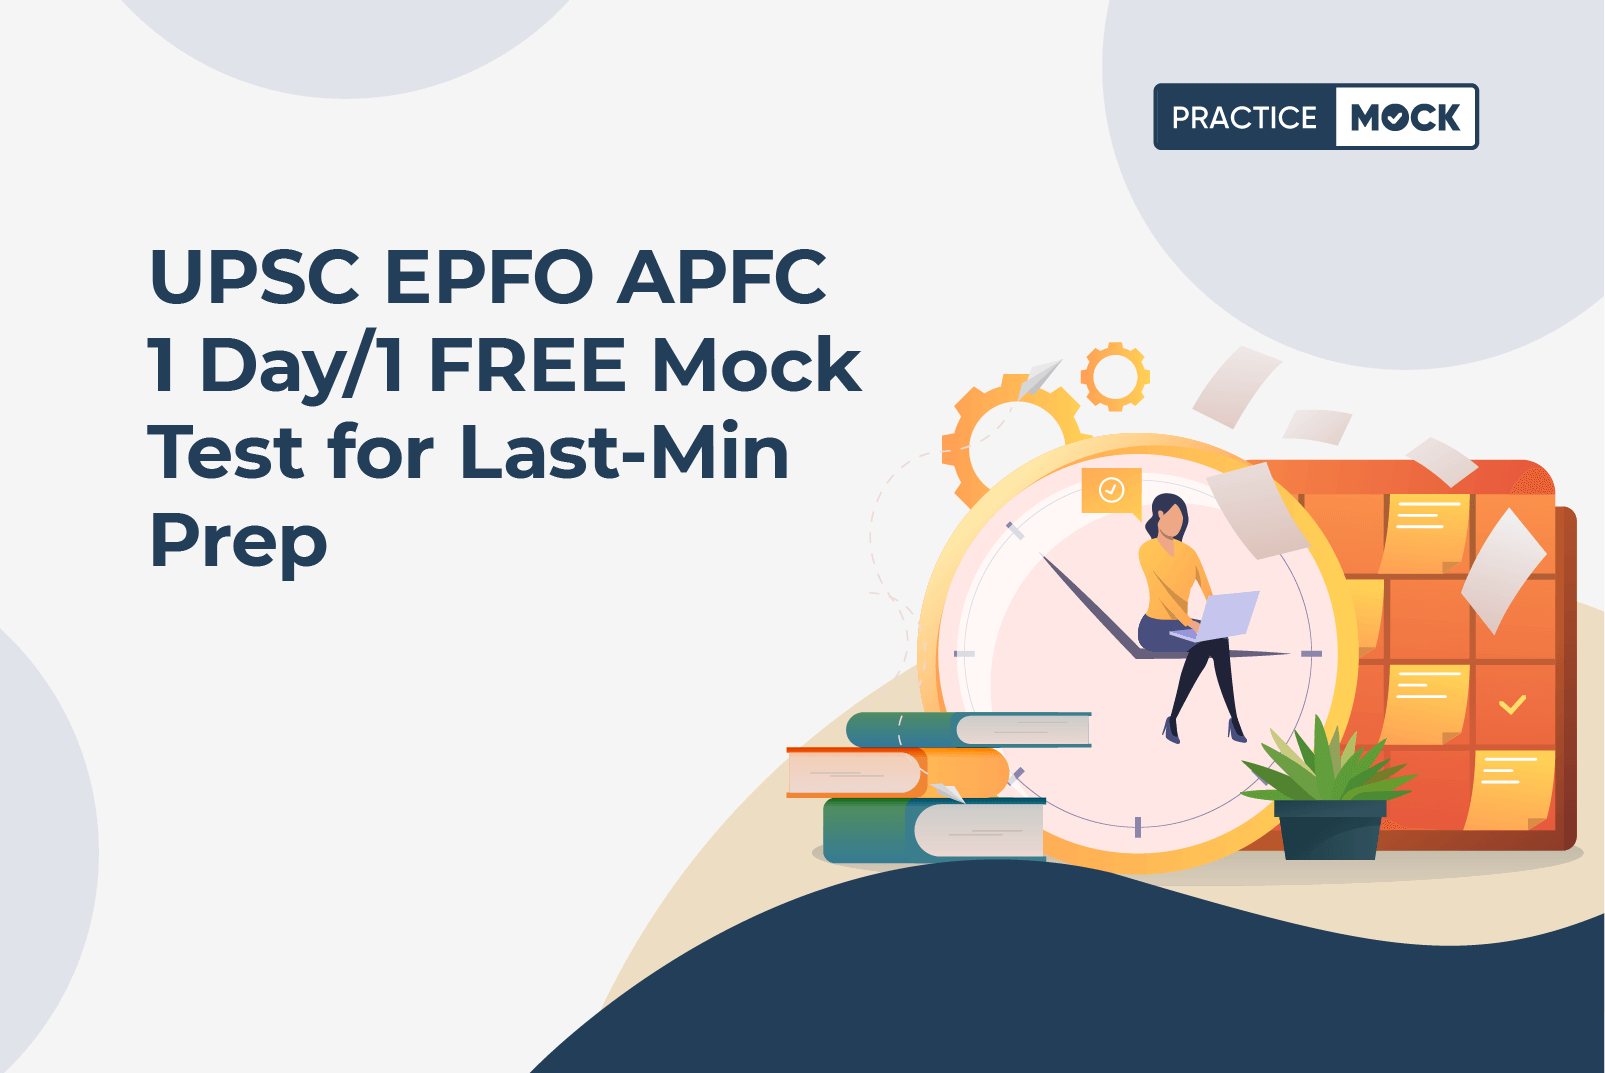 UPSC EPFO APFC 1 Day1 FREE Mock Test for Last-Min Prep